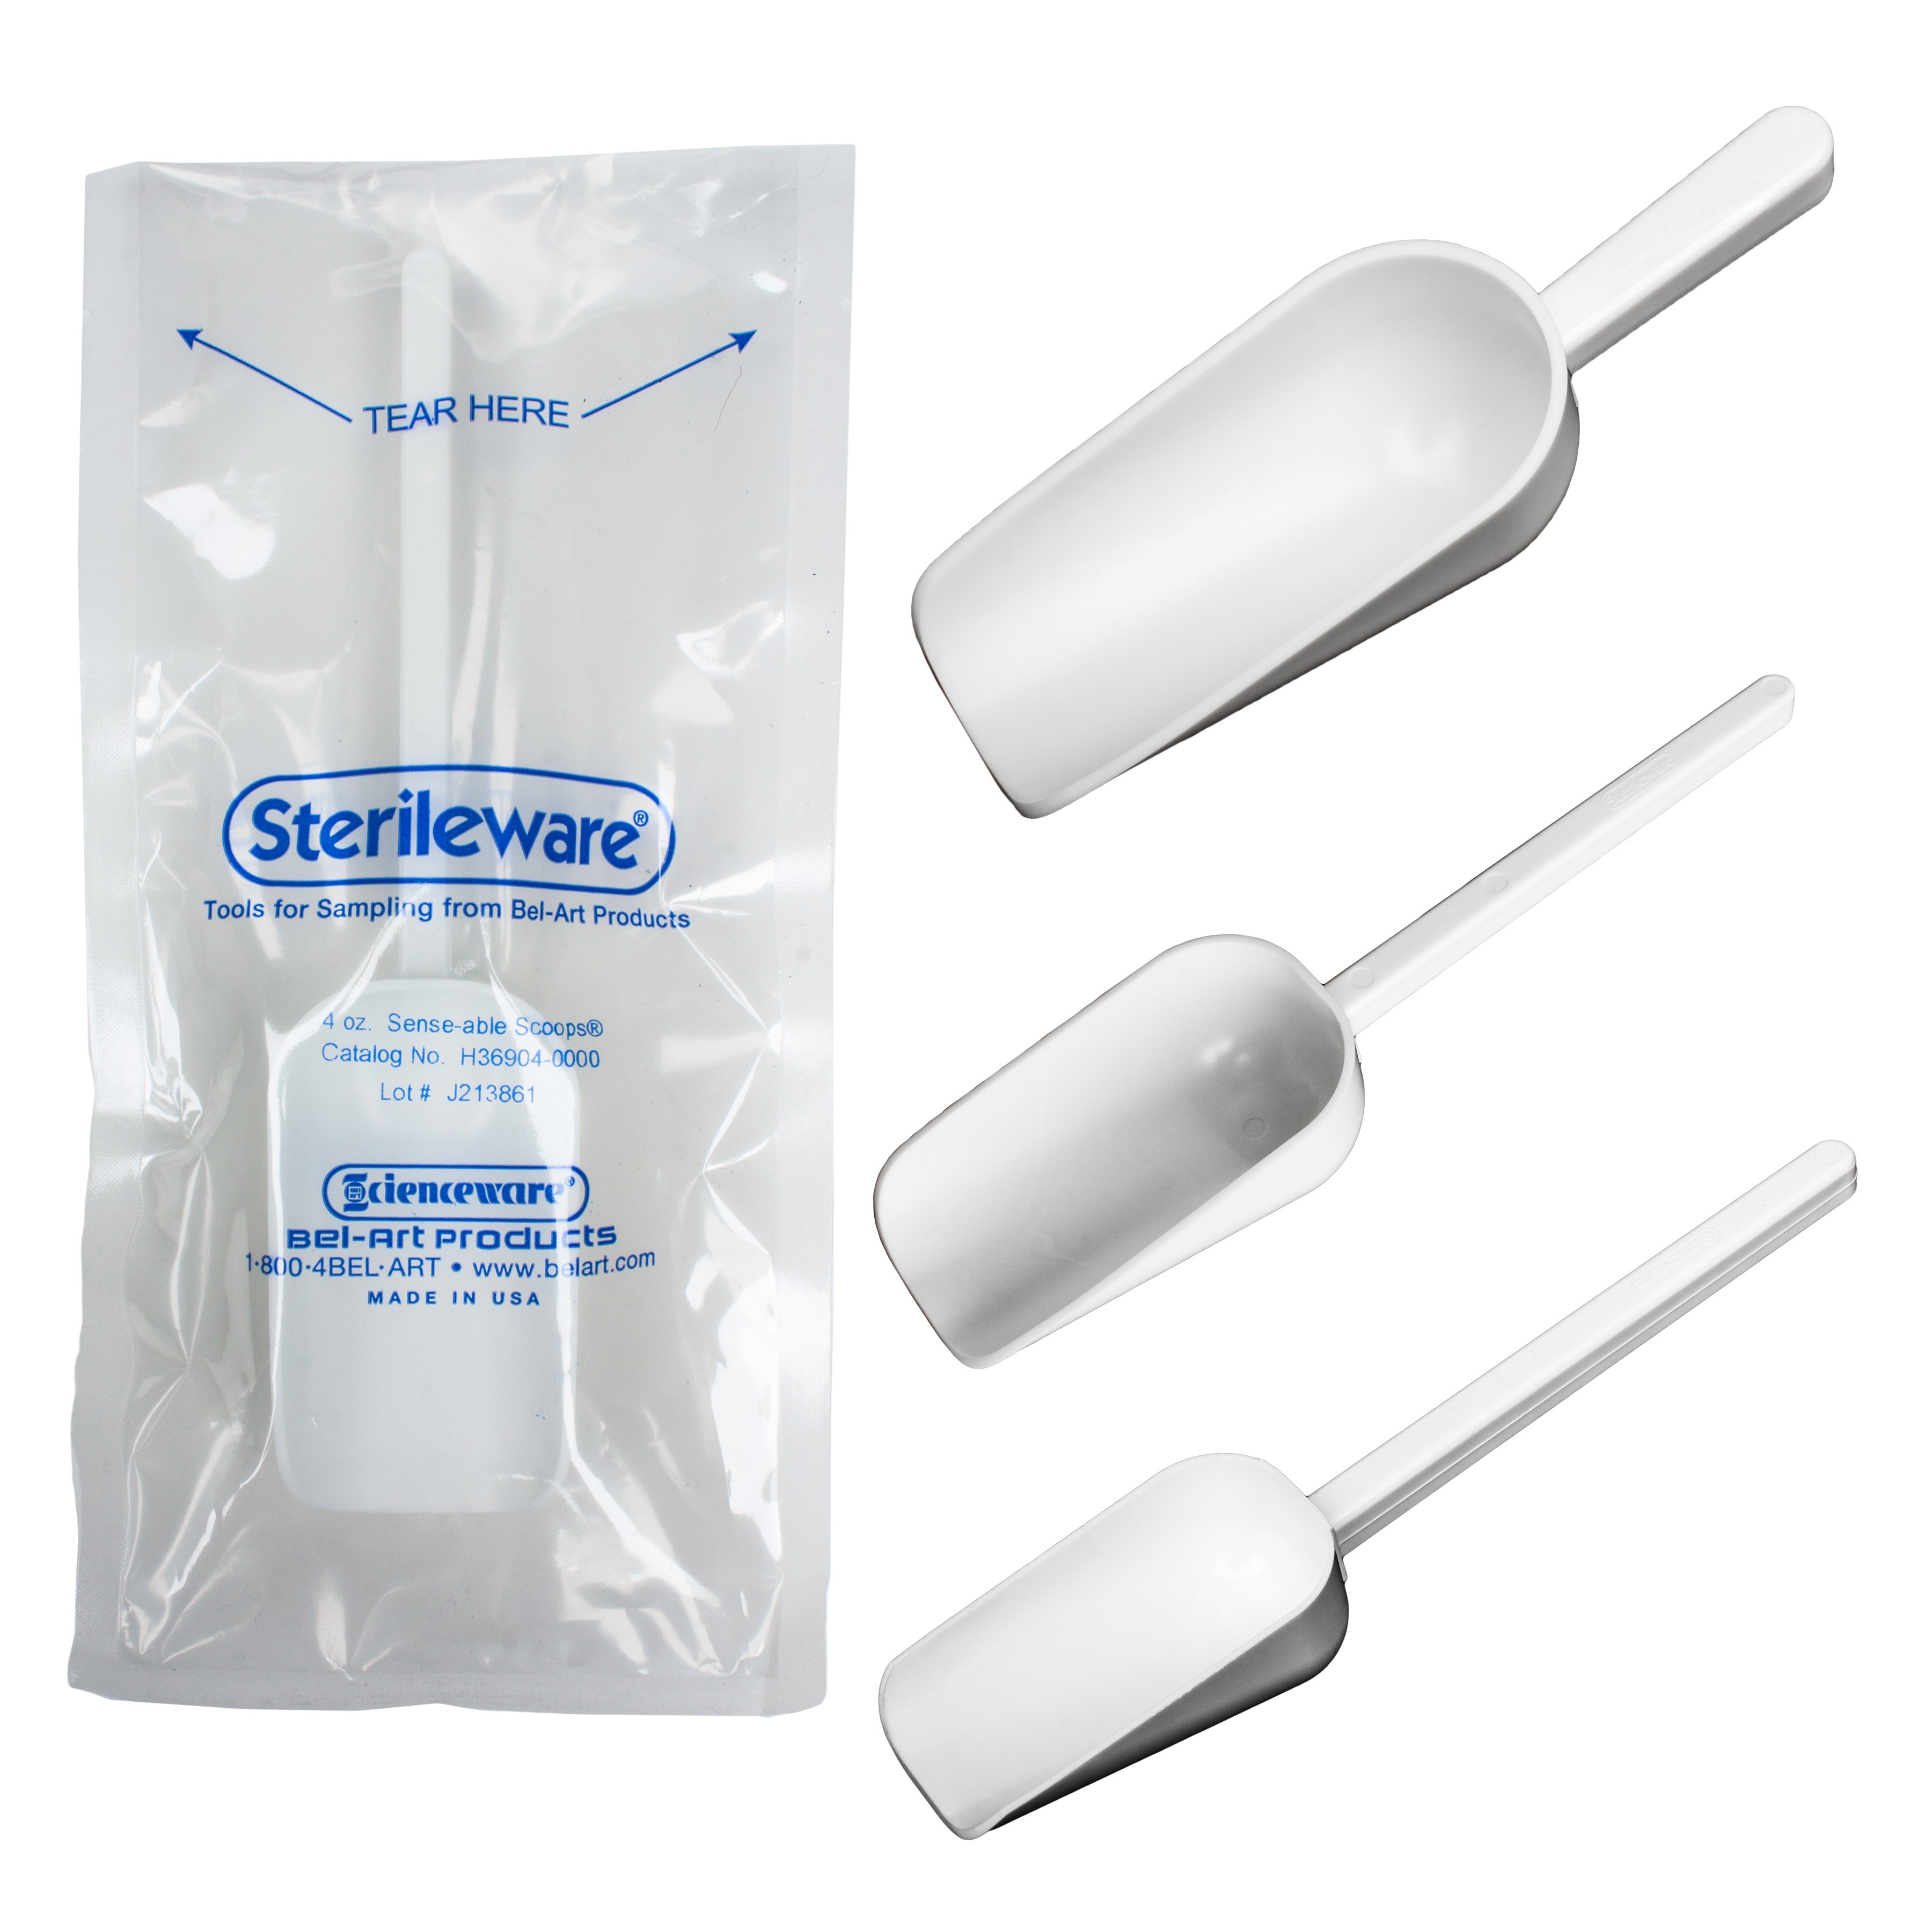 Sterileware Sterile Sampling Scoops - White